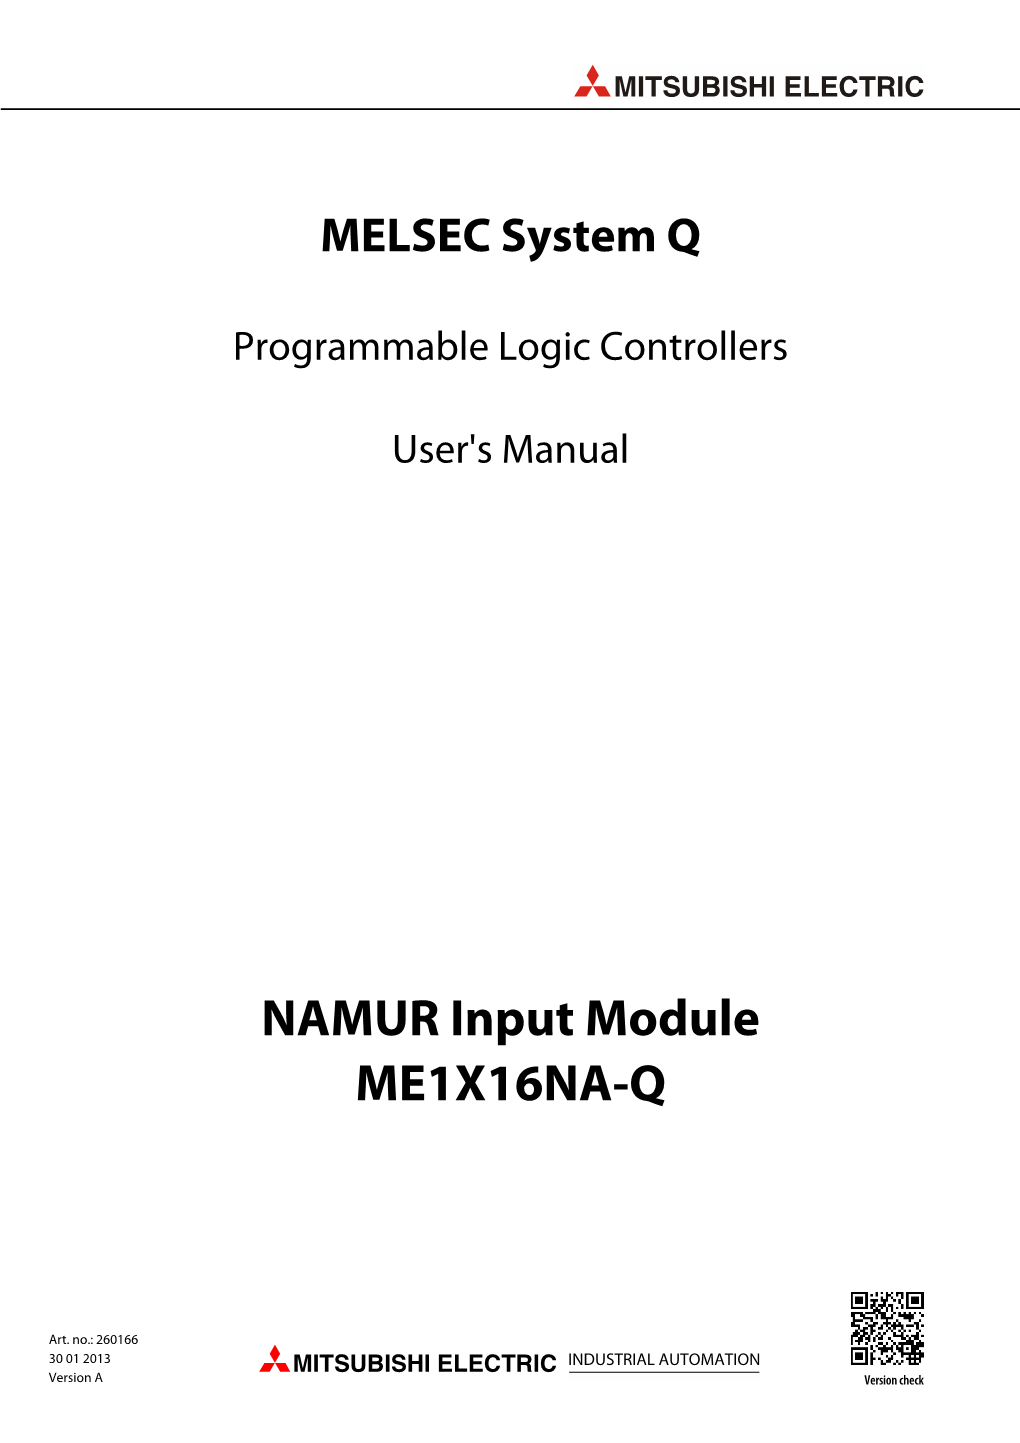 NAMUR Input Module ME1X16NA-Q